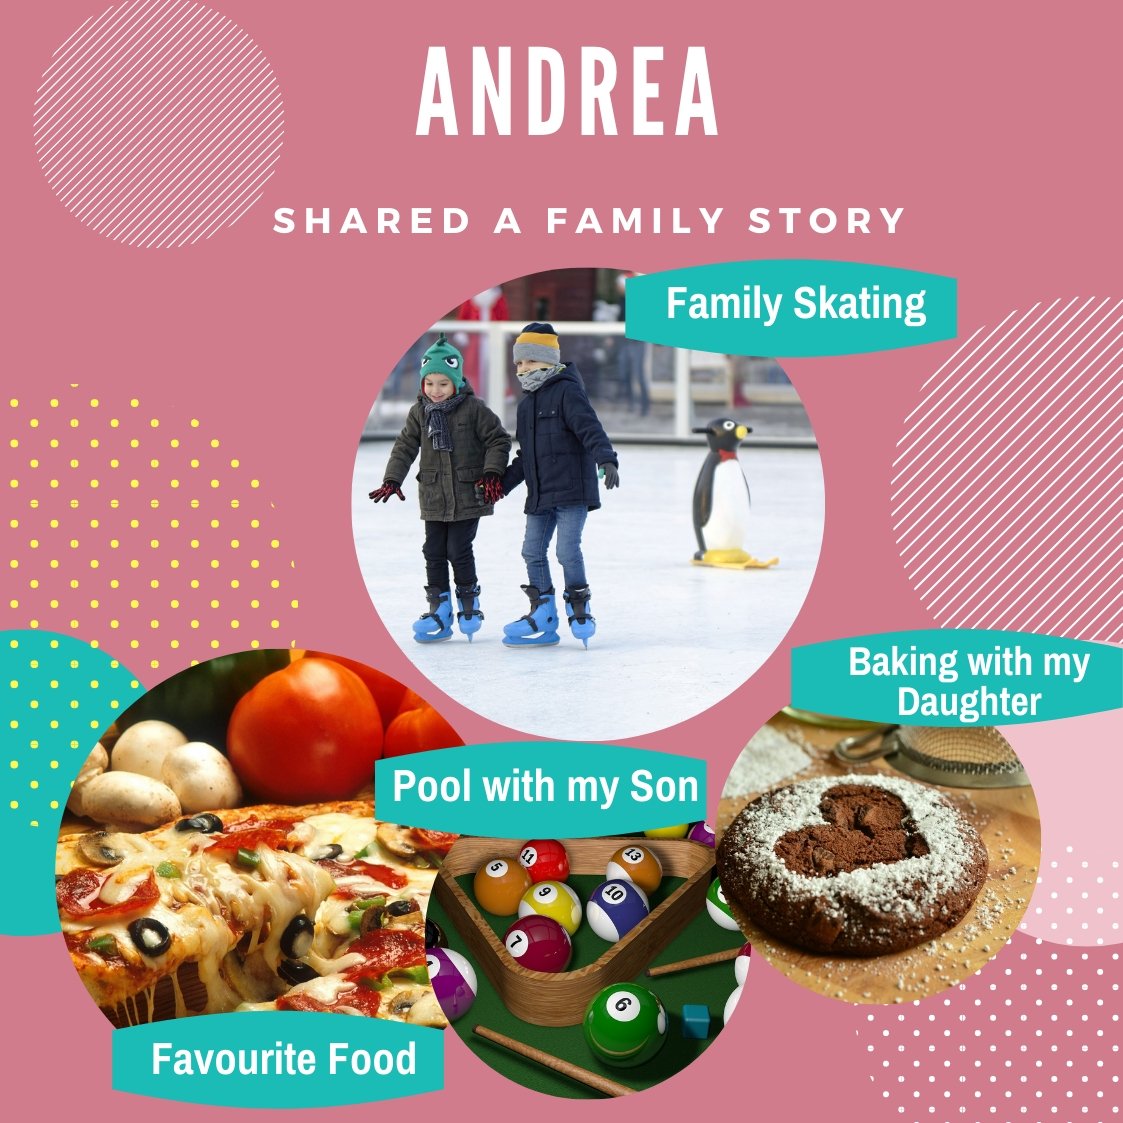 Family Skating & Homemade Pizza are Andrea's Favourites - Artfest Ontario